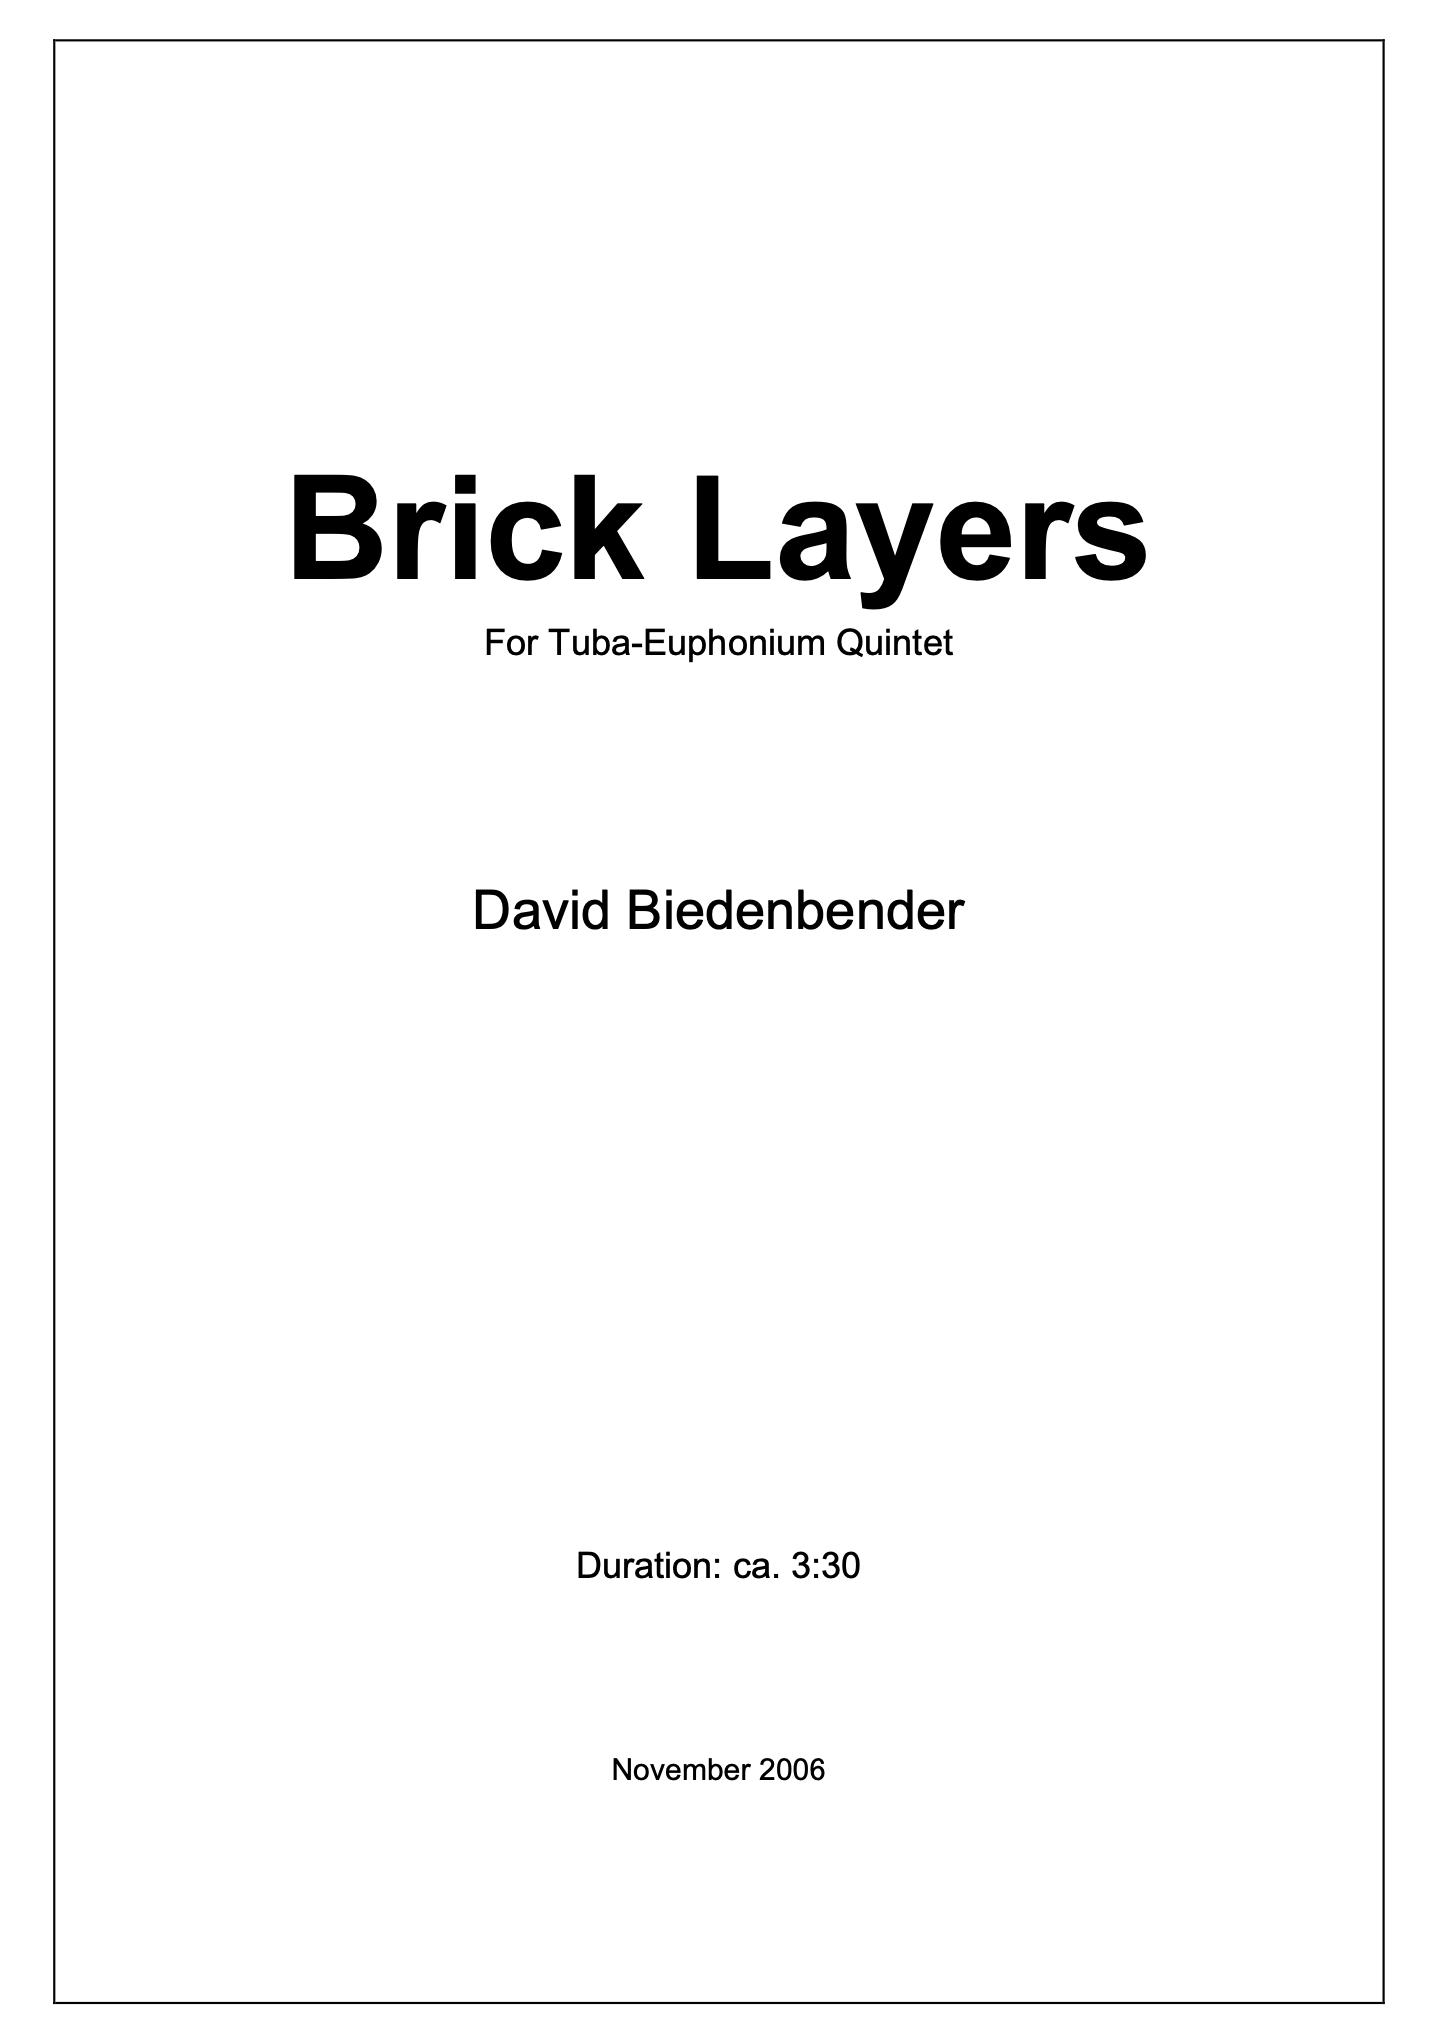 Brick Layers by David Biedenbender